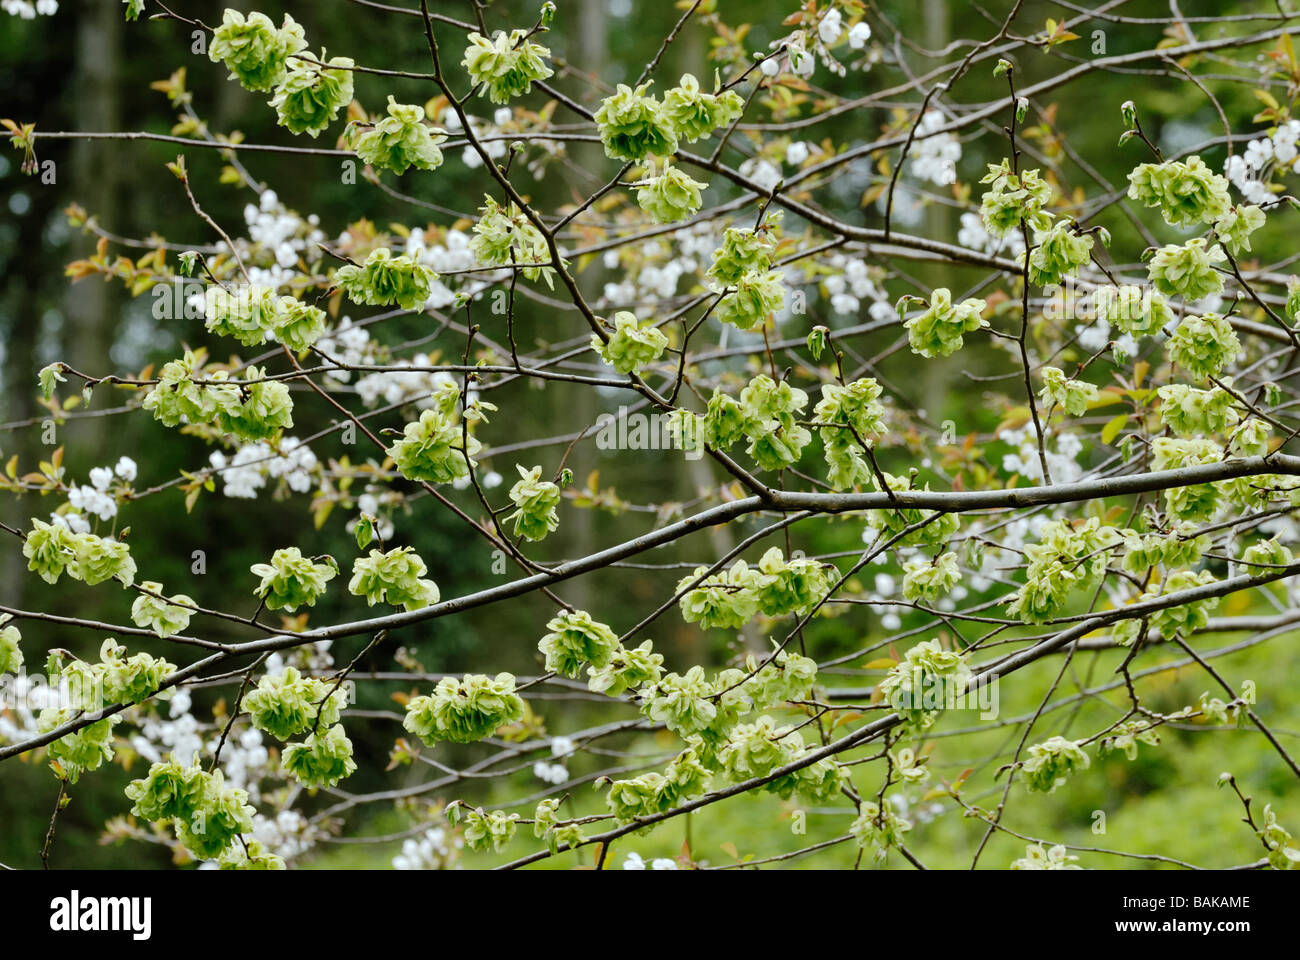 Ulmus glabra Wych Elm seedcases with Prunus avium Gean or Wild Cherry flowers in a Welsh woodland, Wales, UK. Stock Photo